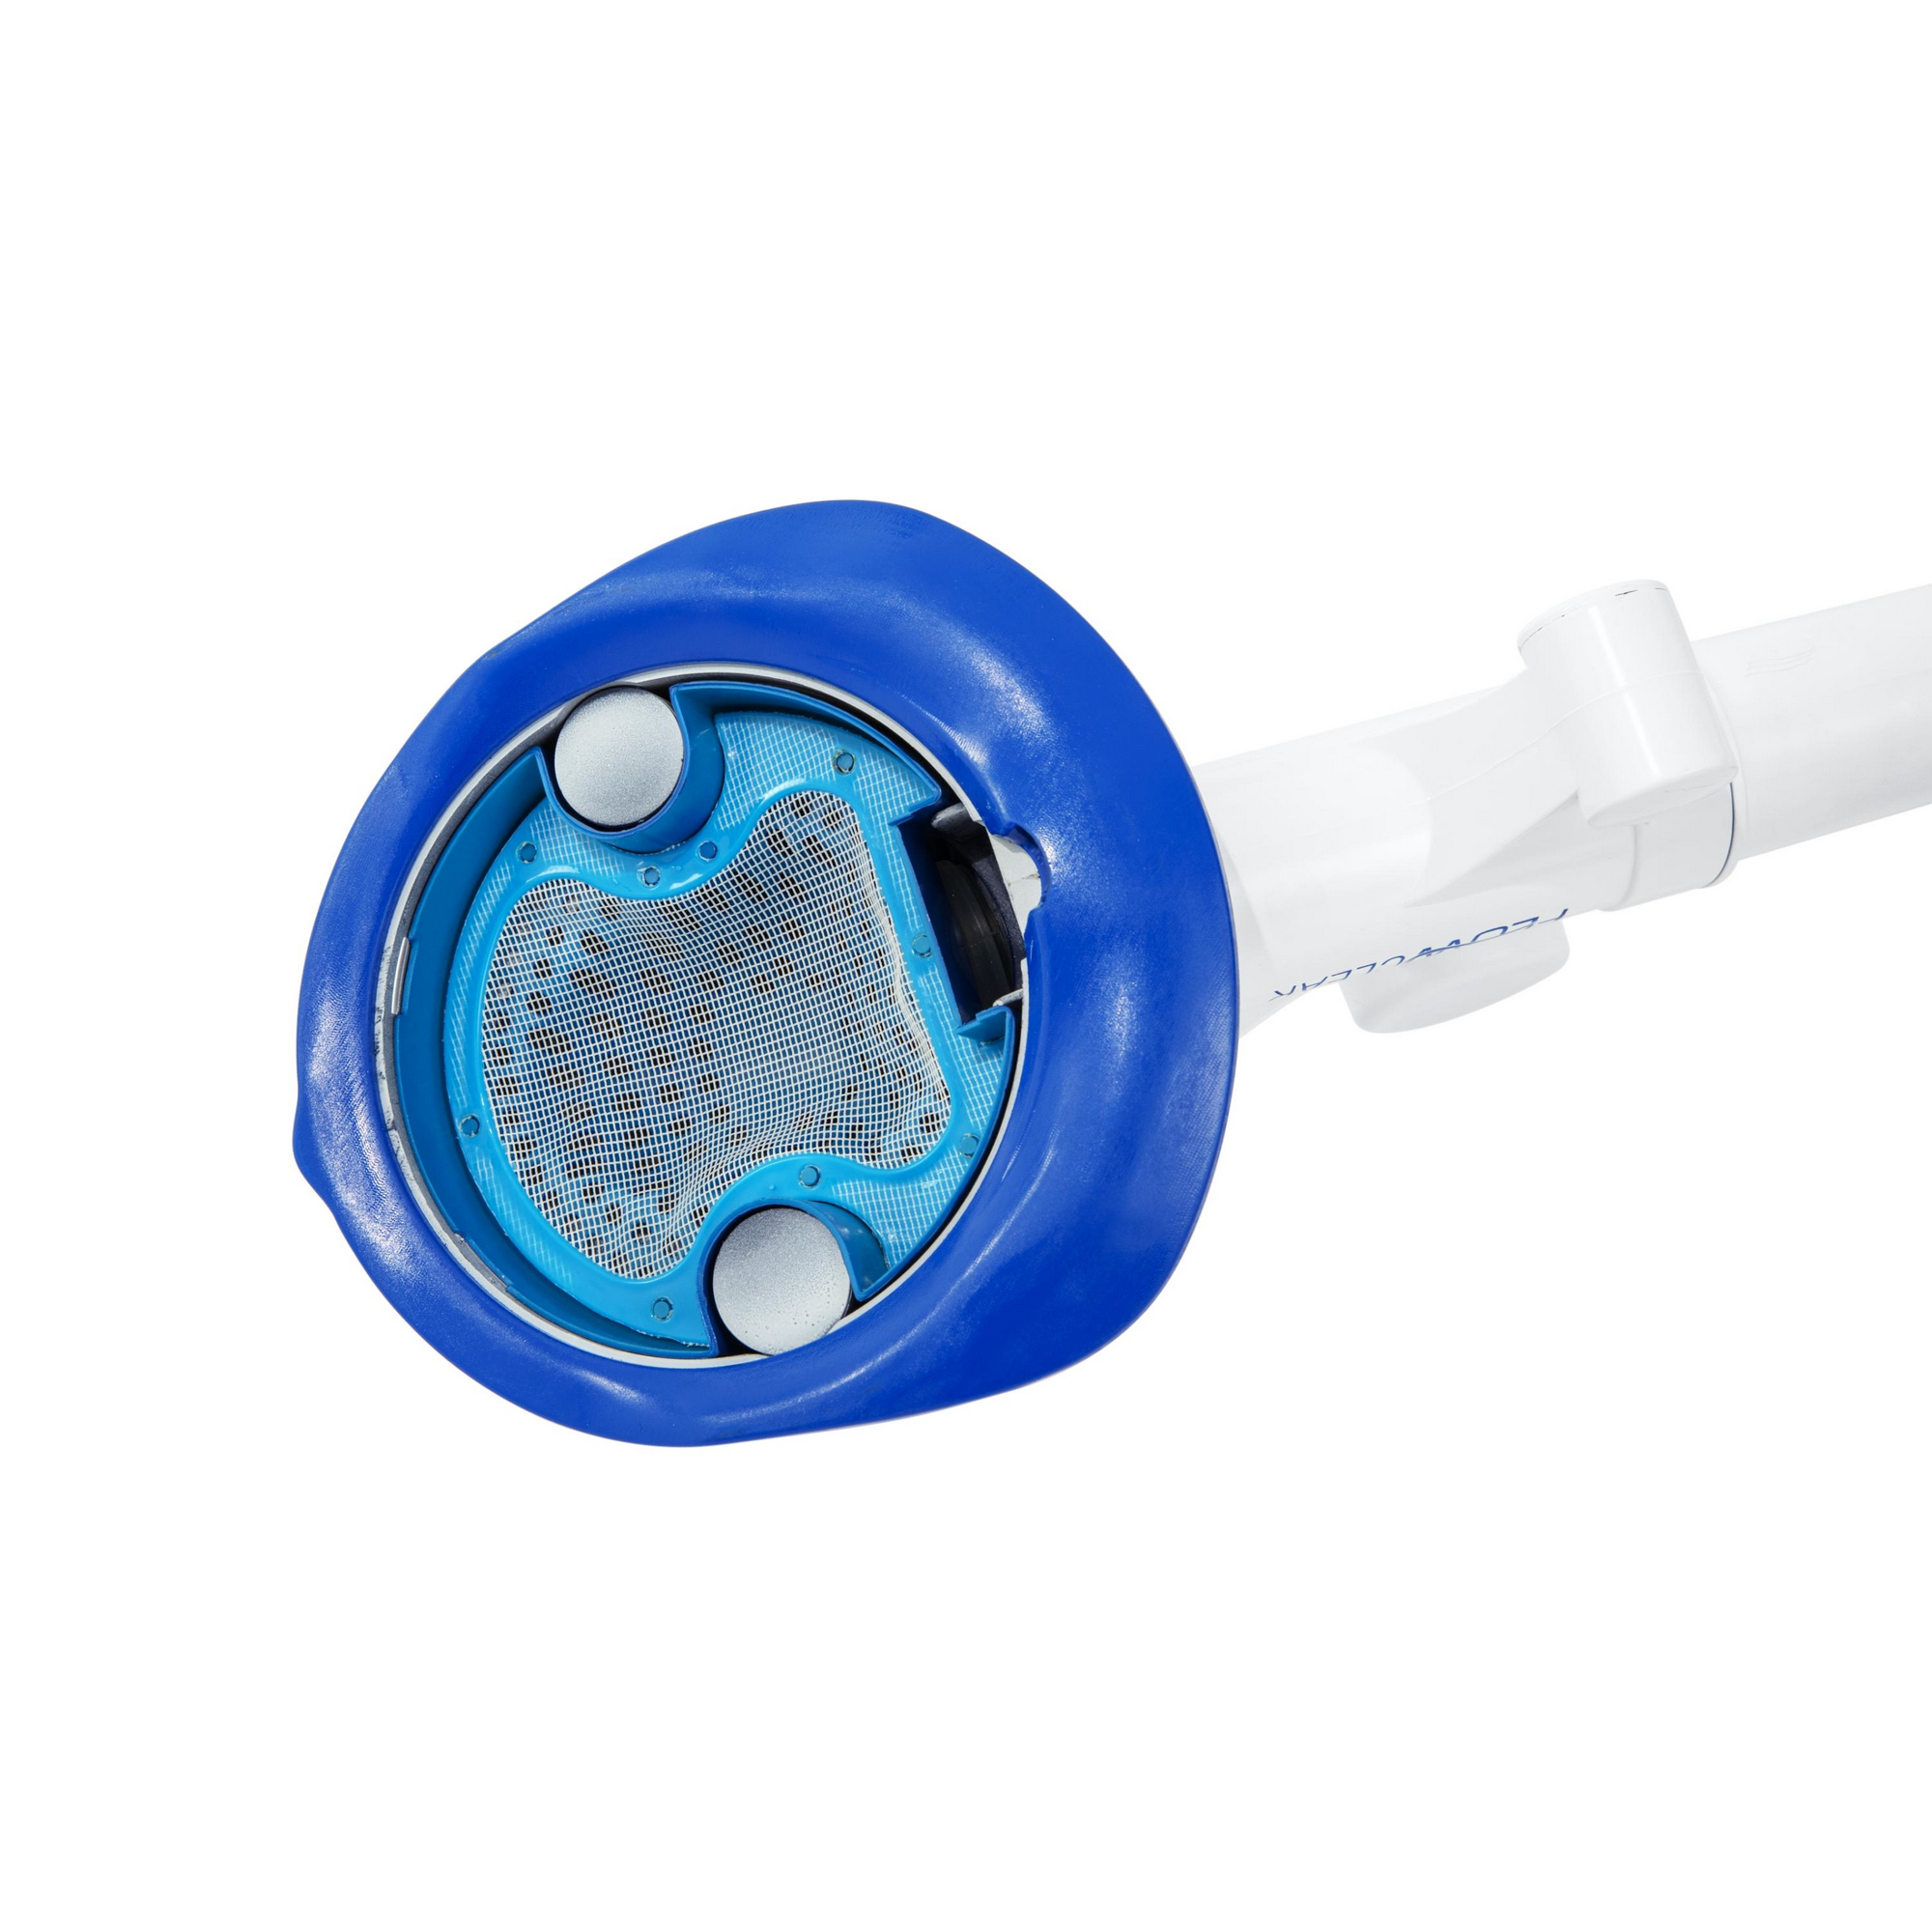 Poolsauger 'Flowclear™ AquaSweeper' weiß, für Poolgrößen bis 670 cm + product picture